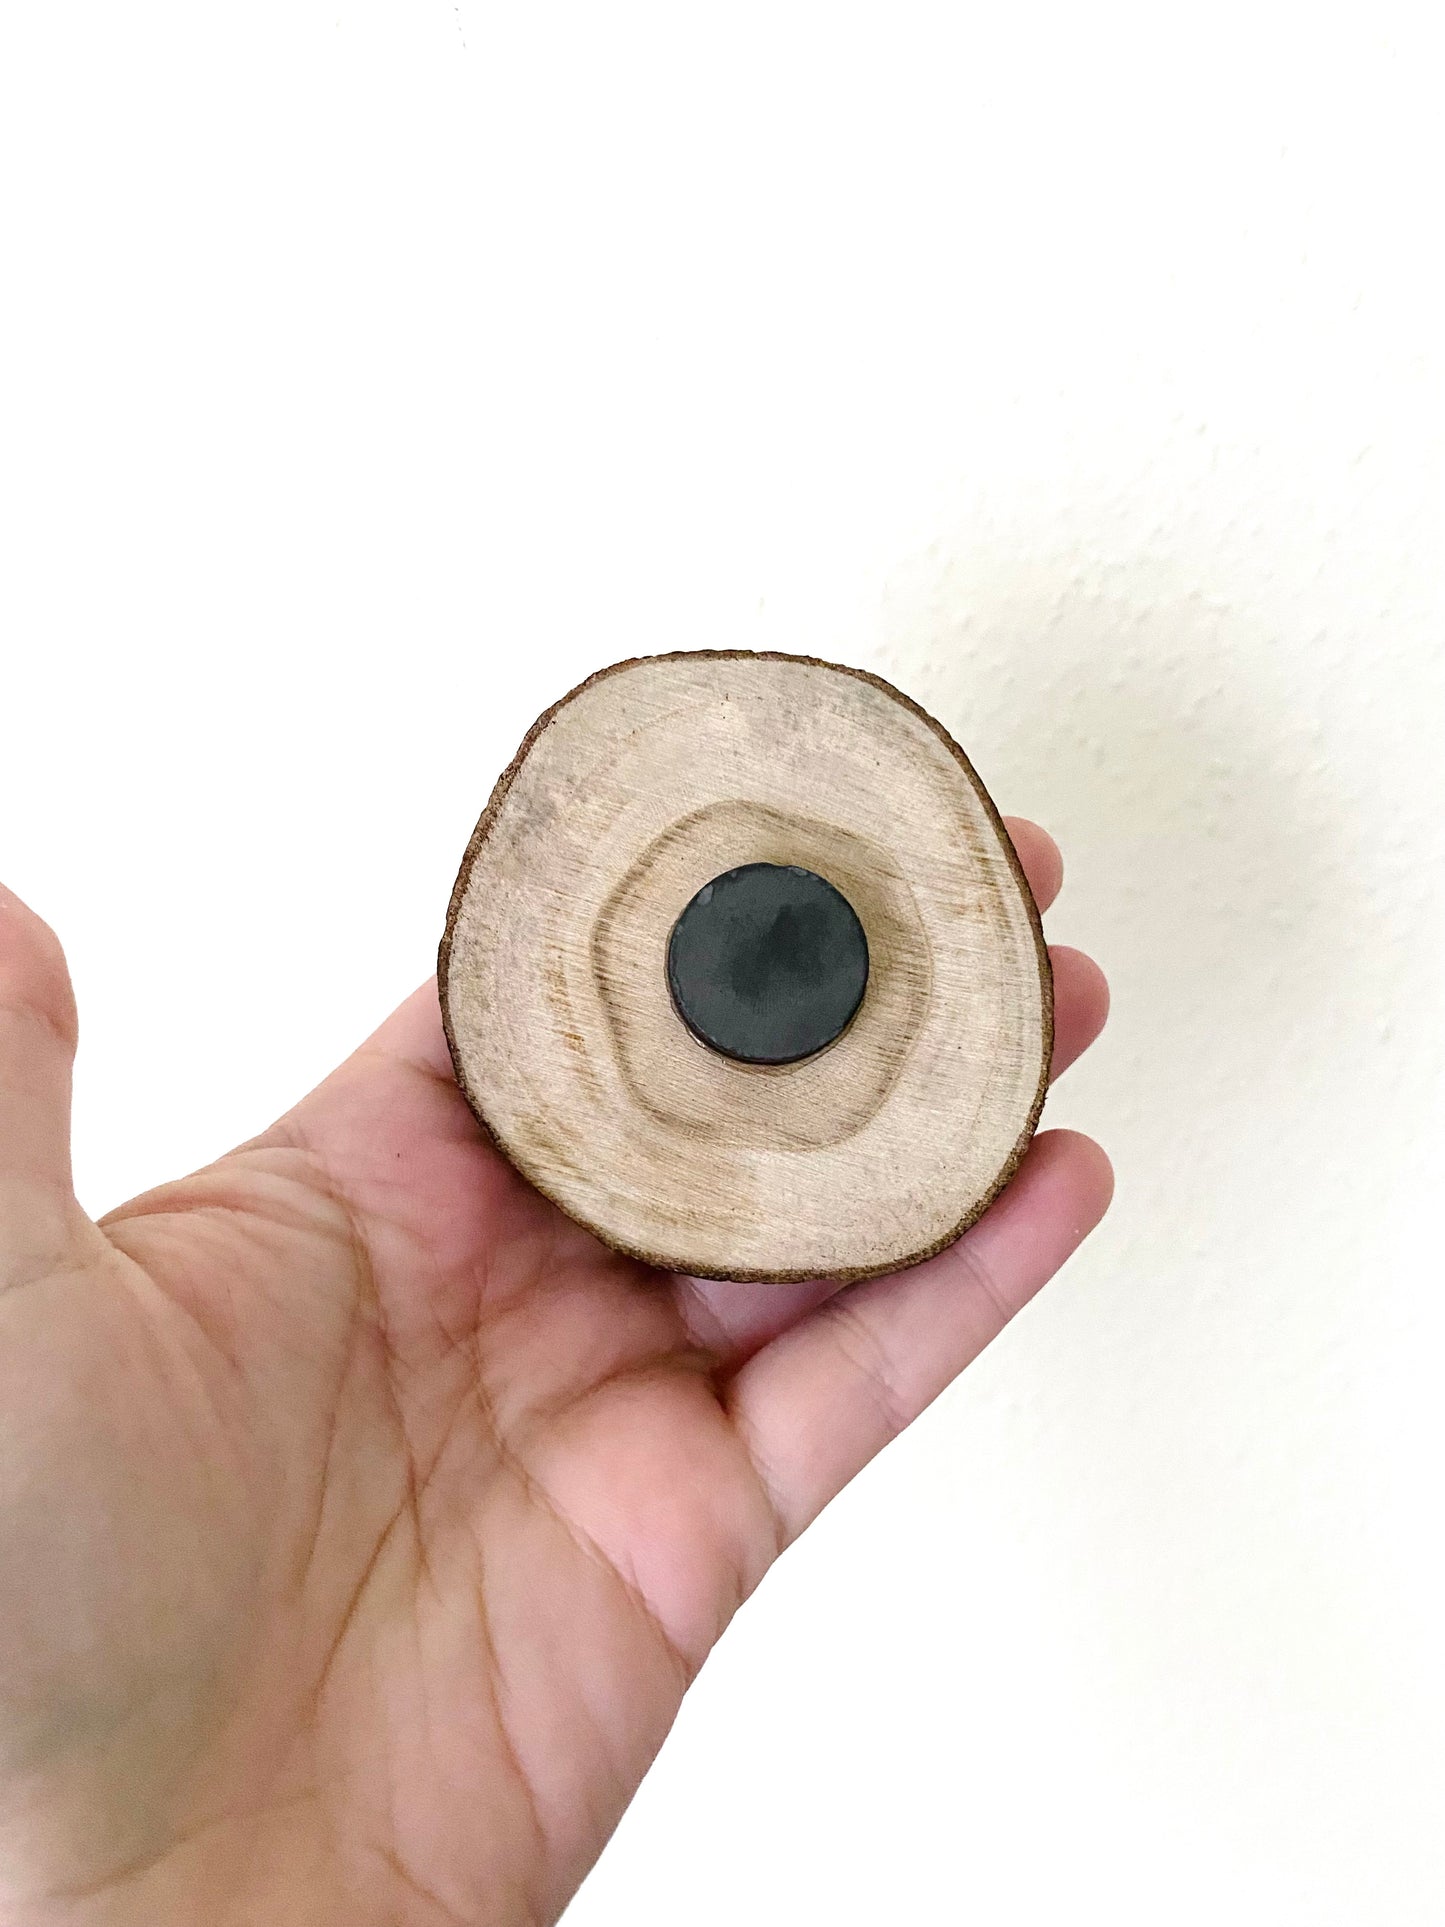 Hand-painted mini wood slice MAGNET / Kézzel festett mini fakorong mágnes